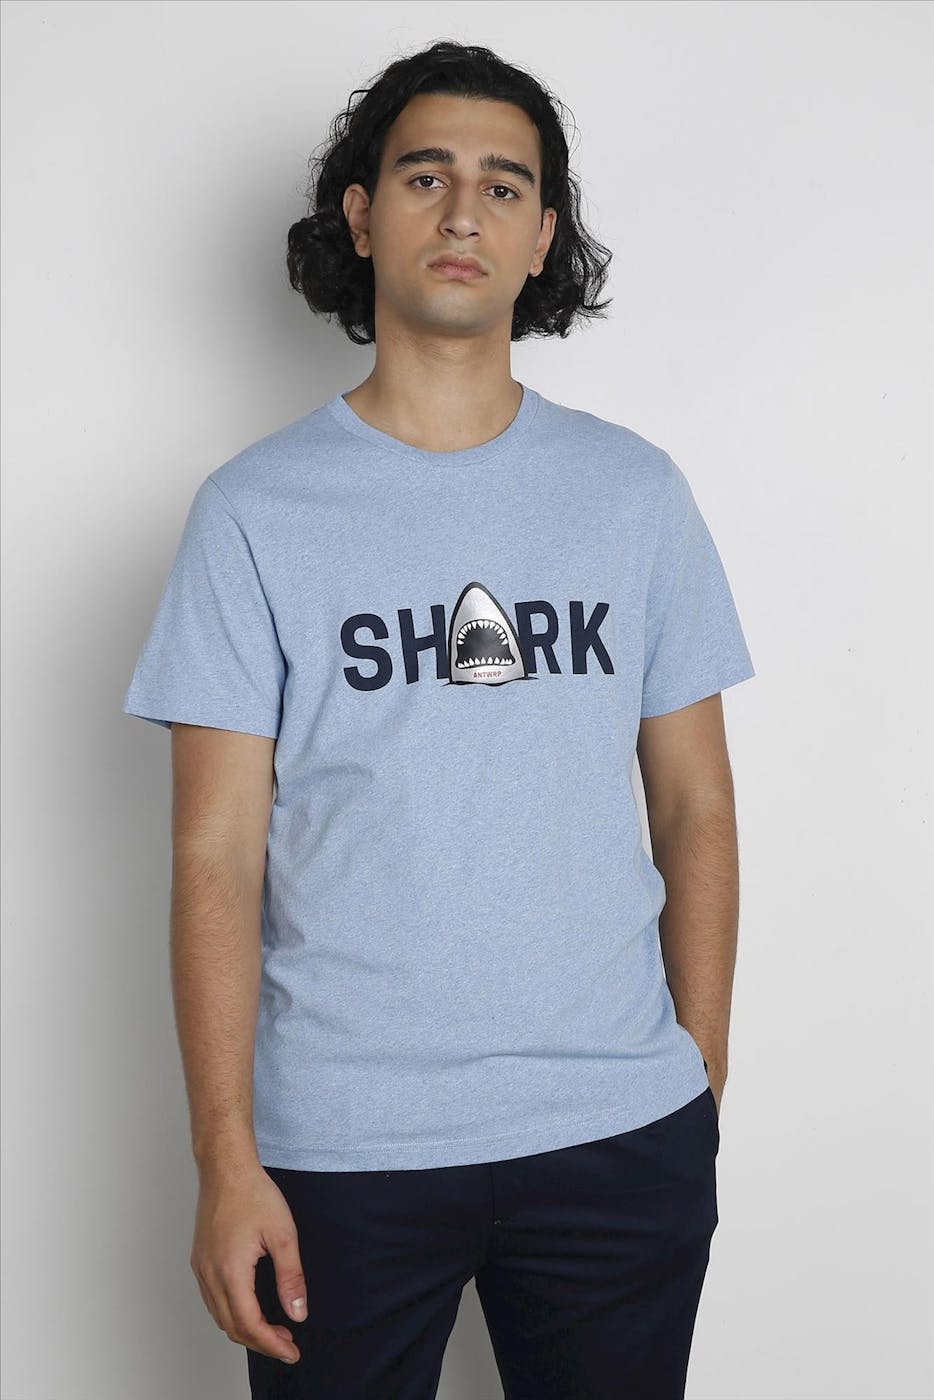 Antwrp - Lichtblauwe Shark T-shirt